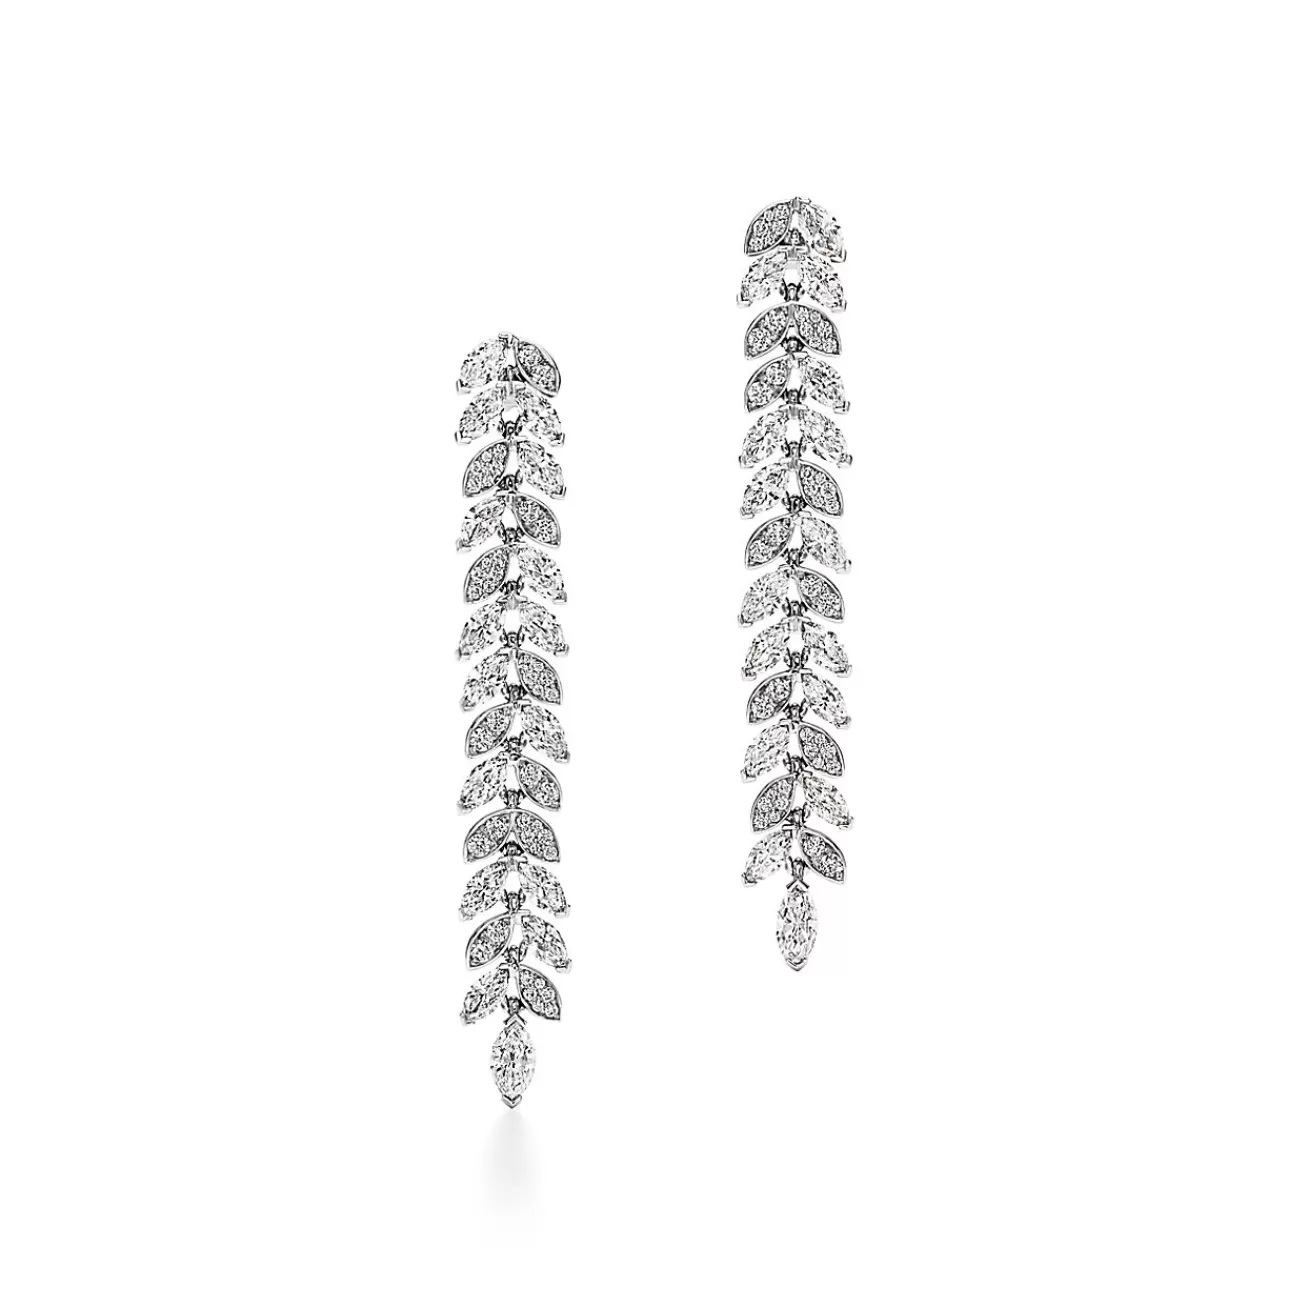 Tiffany & Co. Tiffany Victoria® diamond vine drop earrings in platinum. | ^ Earrings | Platinum Jewelry